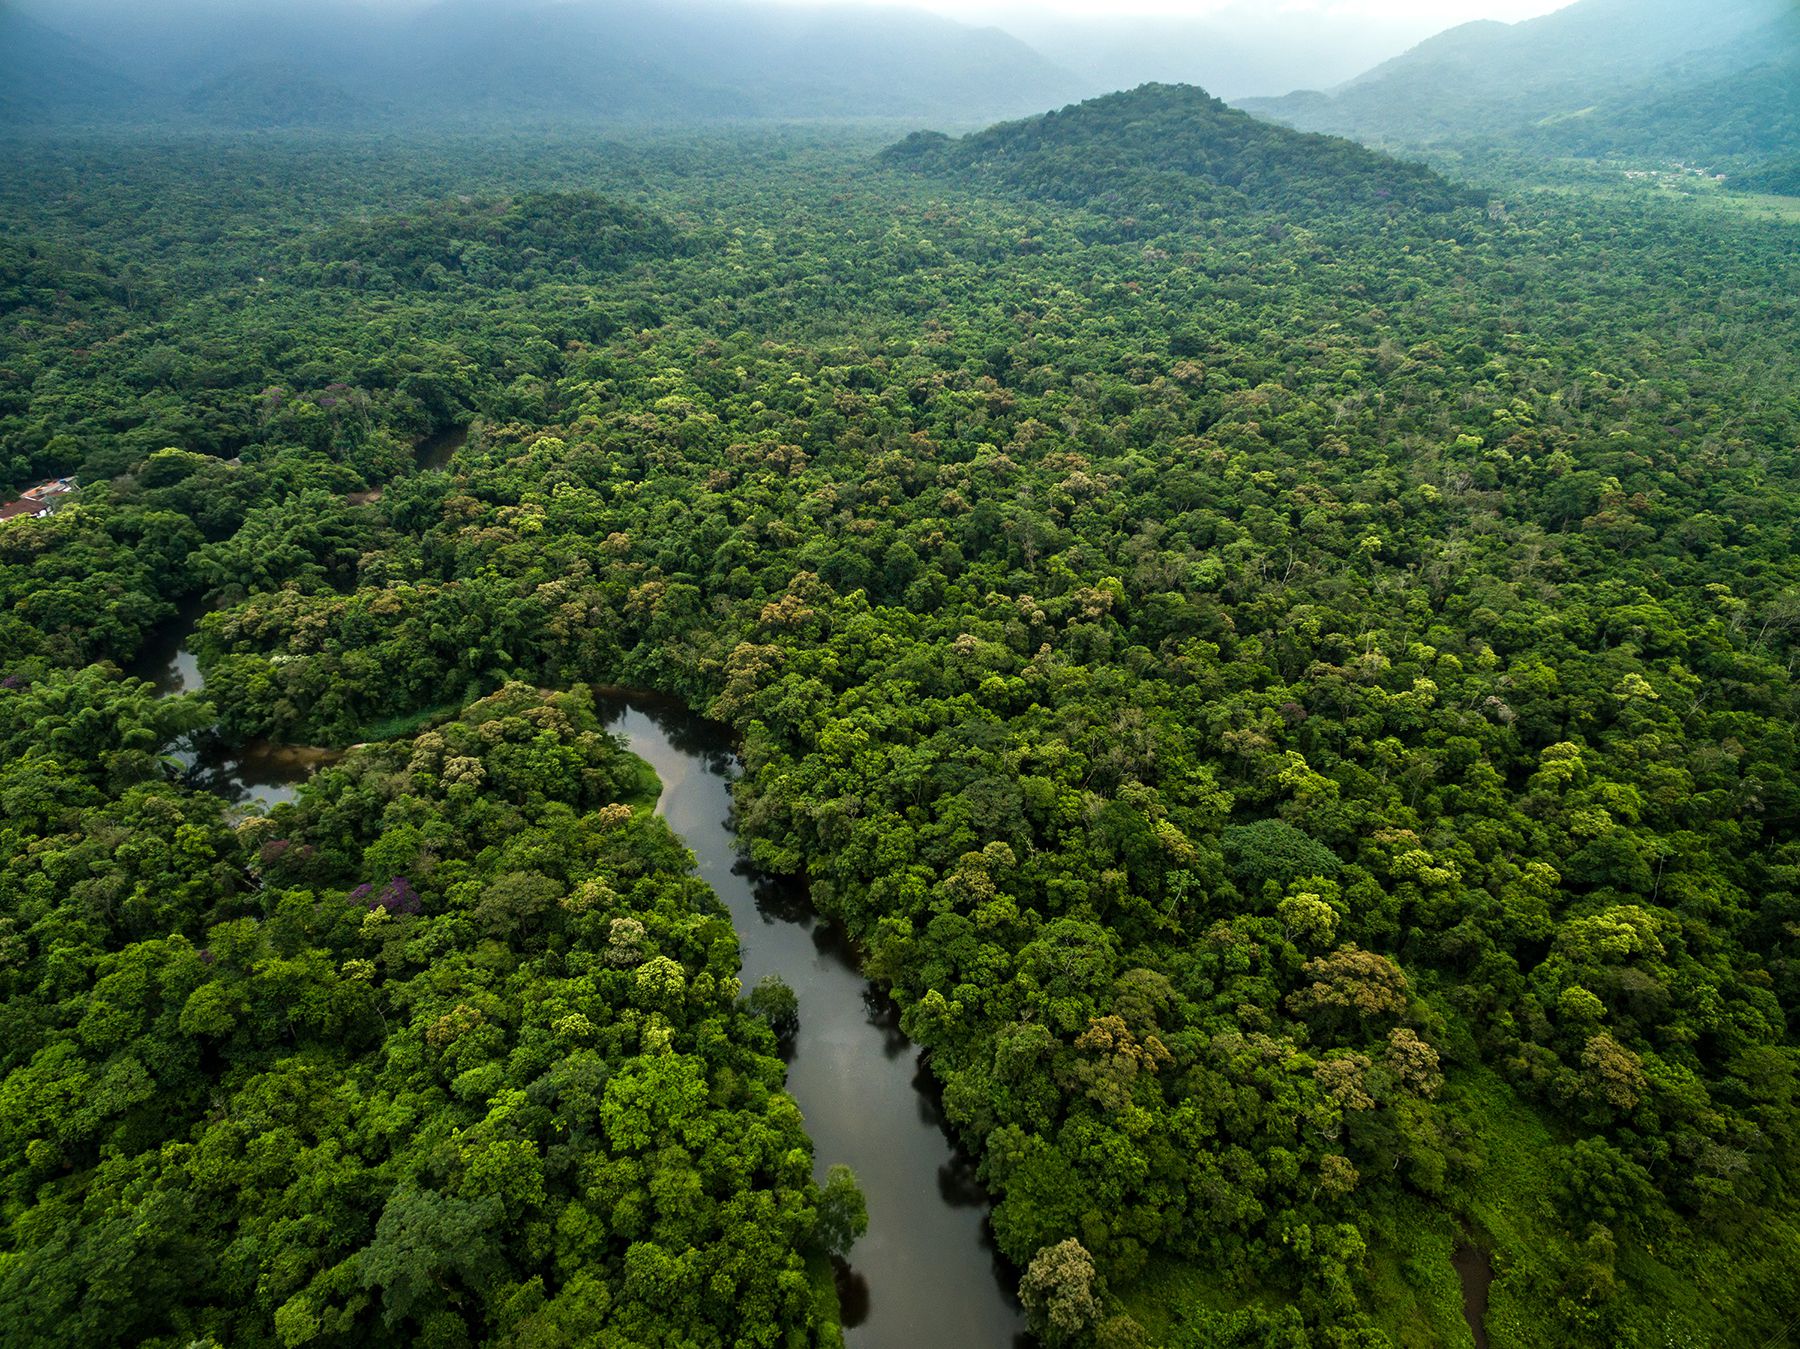 Amazon rainforest before